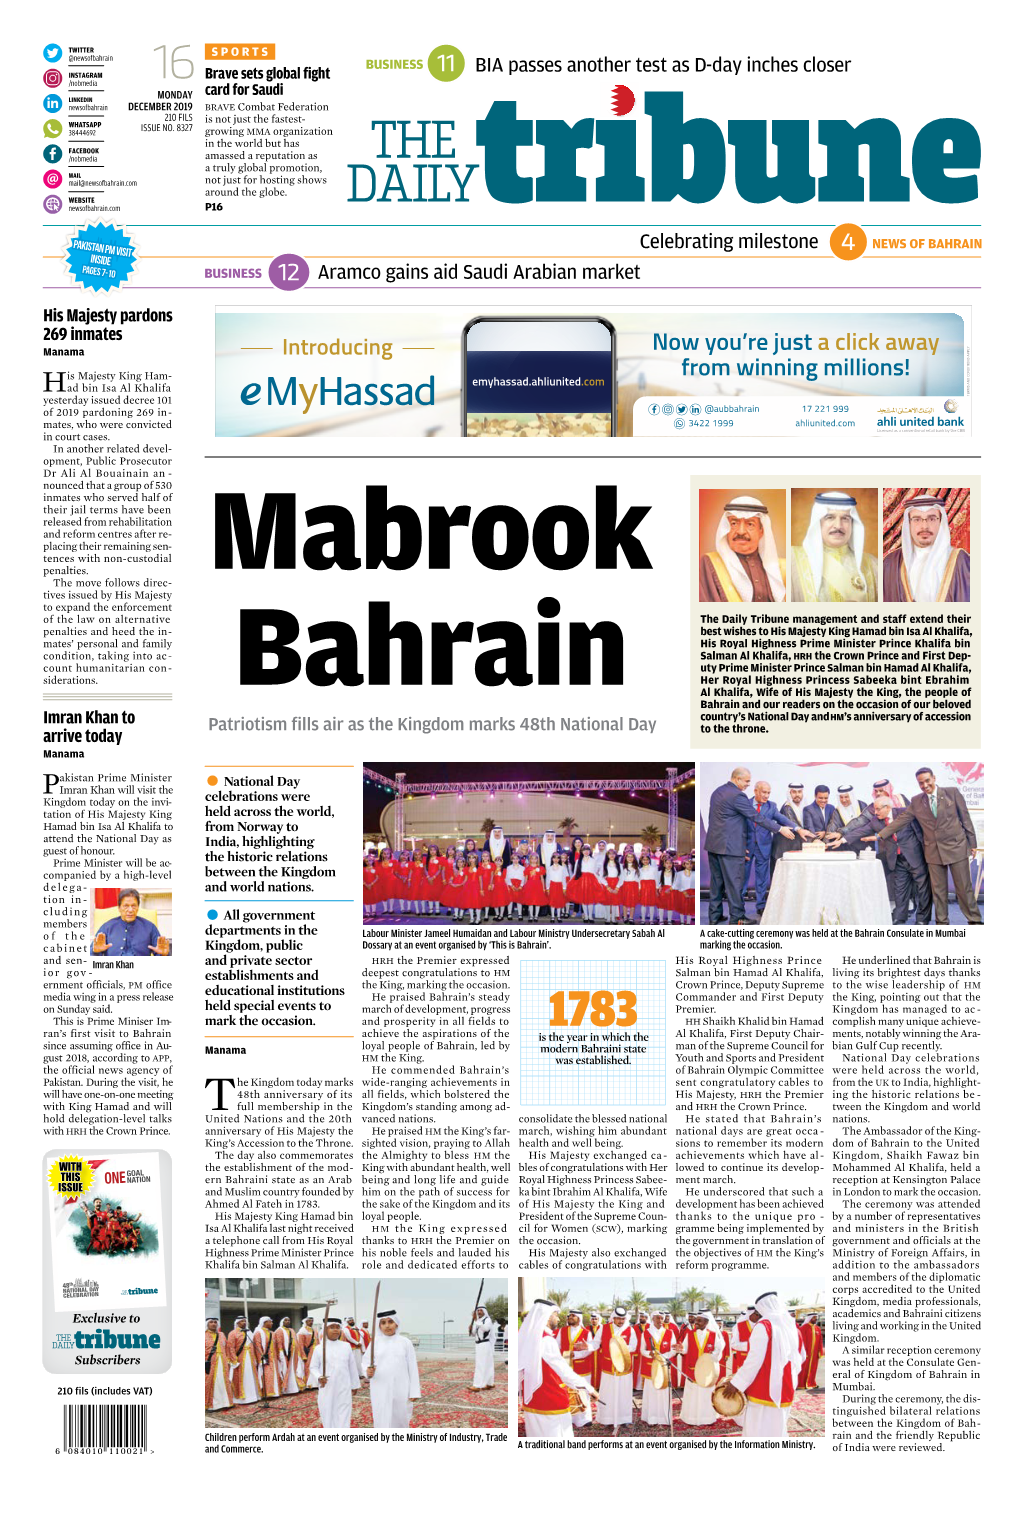 Aramco Gains Aid Saudi Arabian Market BIA Passes Another Test As